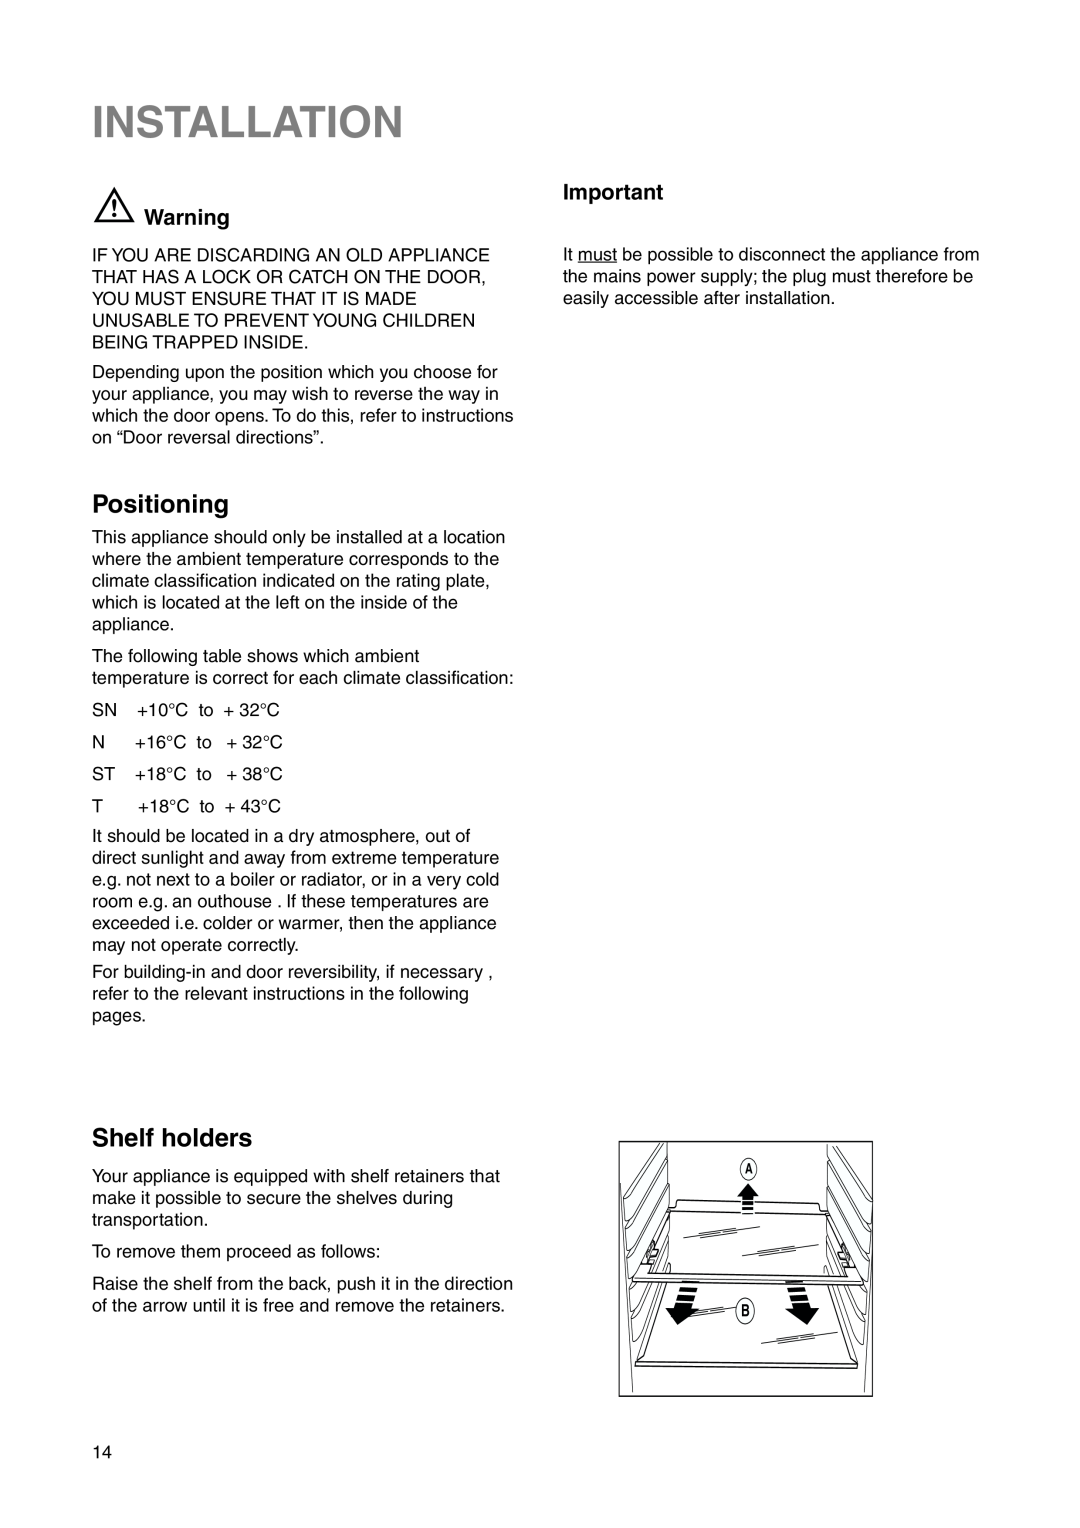 Electrolux 2223 208-81 user manual Installation, Positioning, Shelf holders 